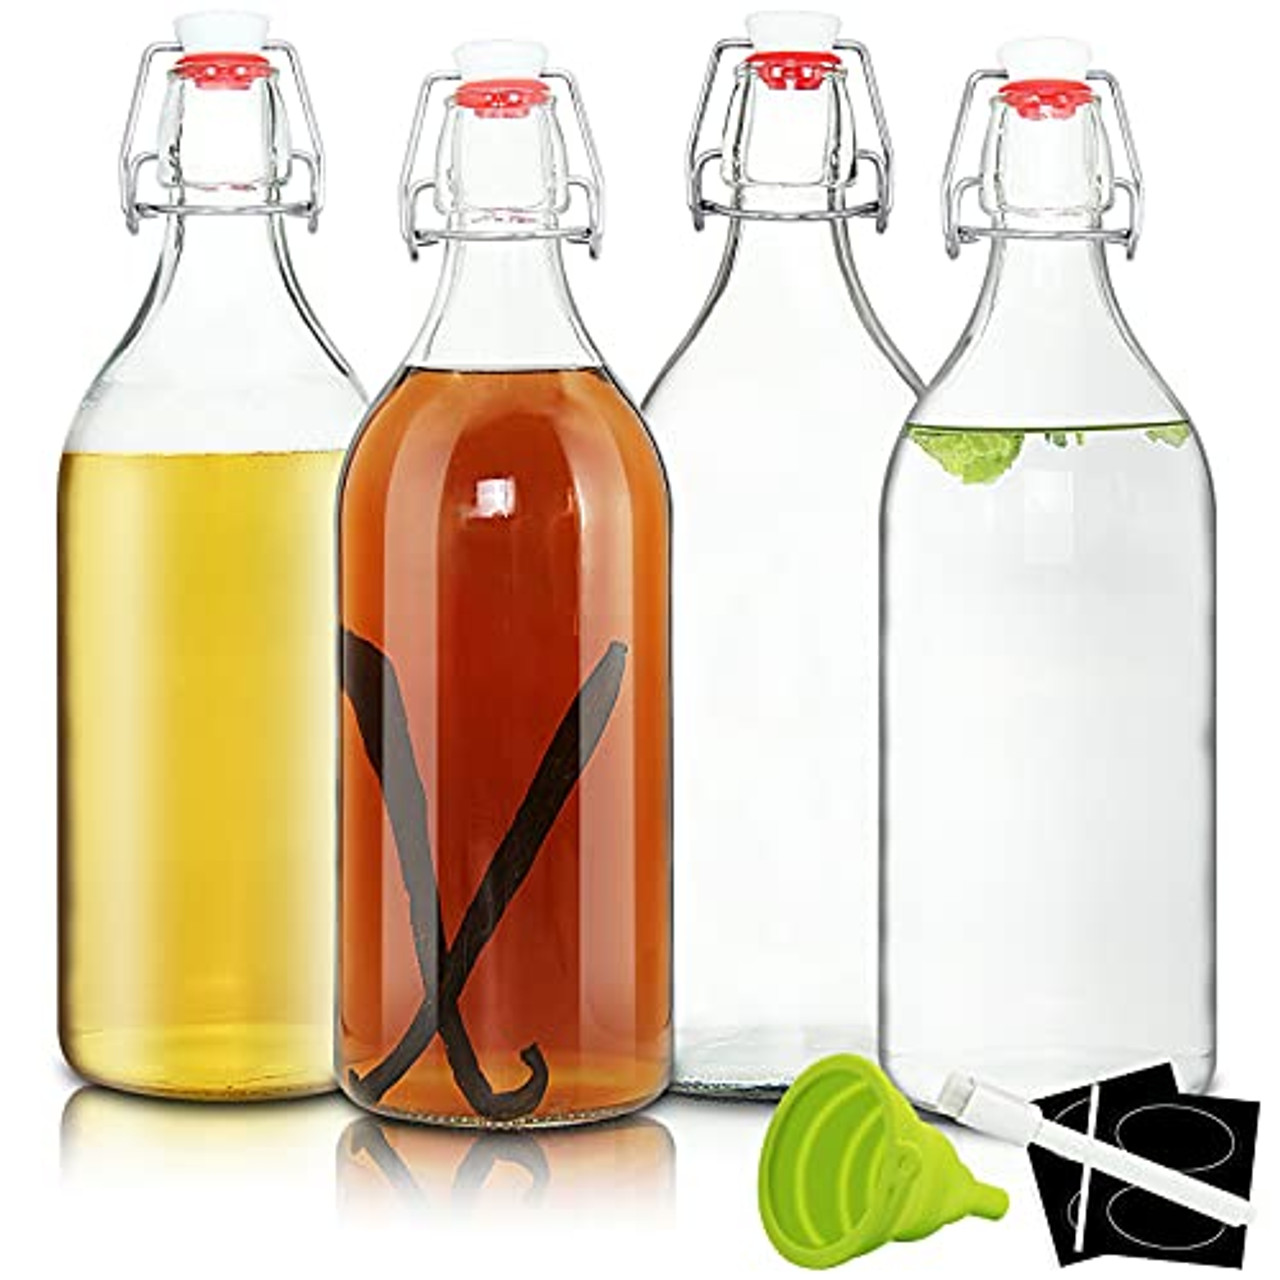 12 PCS Silicone Rubber Bottle Caps, Reusable Beer Caps for Home Brewing Beer,  Soft Drink, Wine Bottle, Beer Bottle, Soda Bottles Kitchen Gadgets 